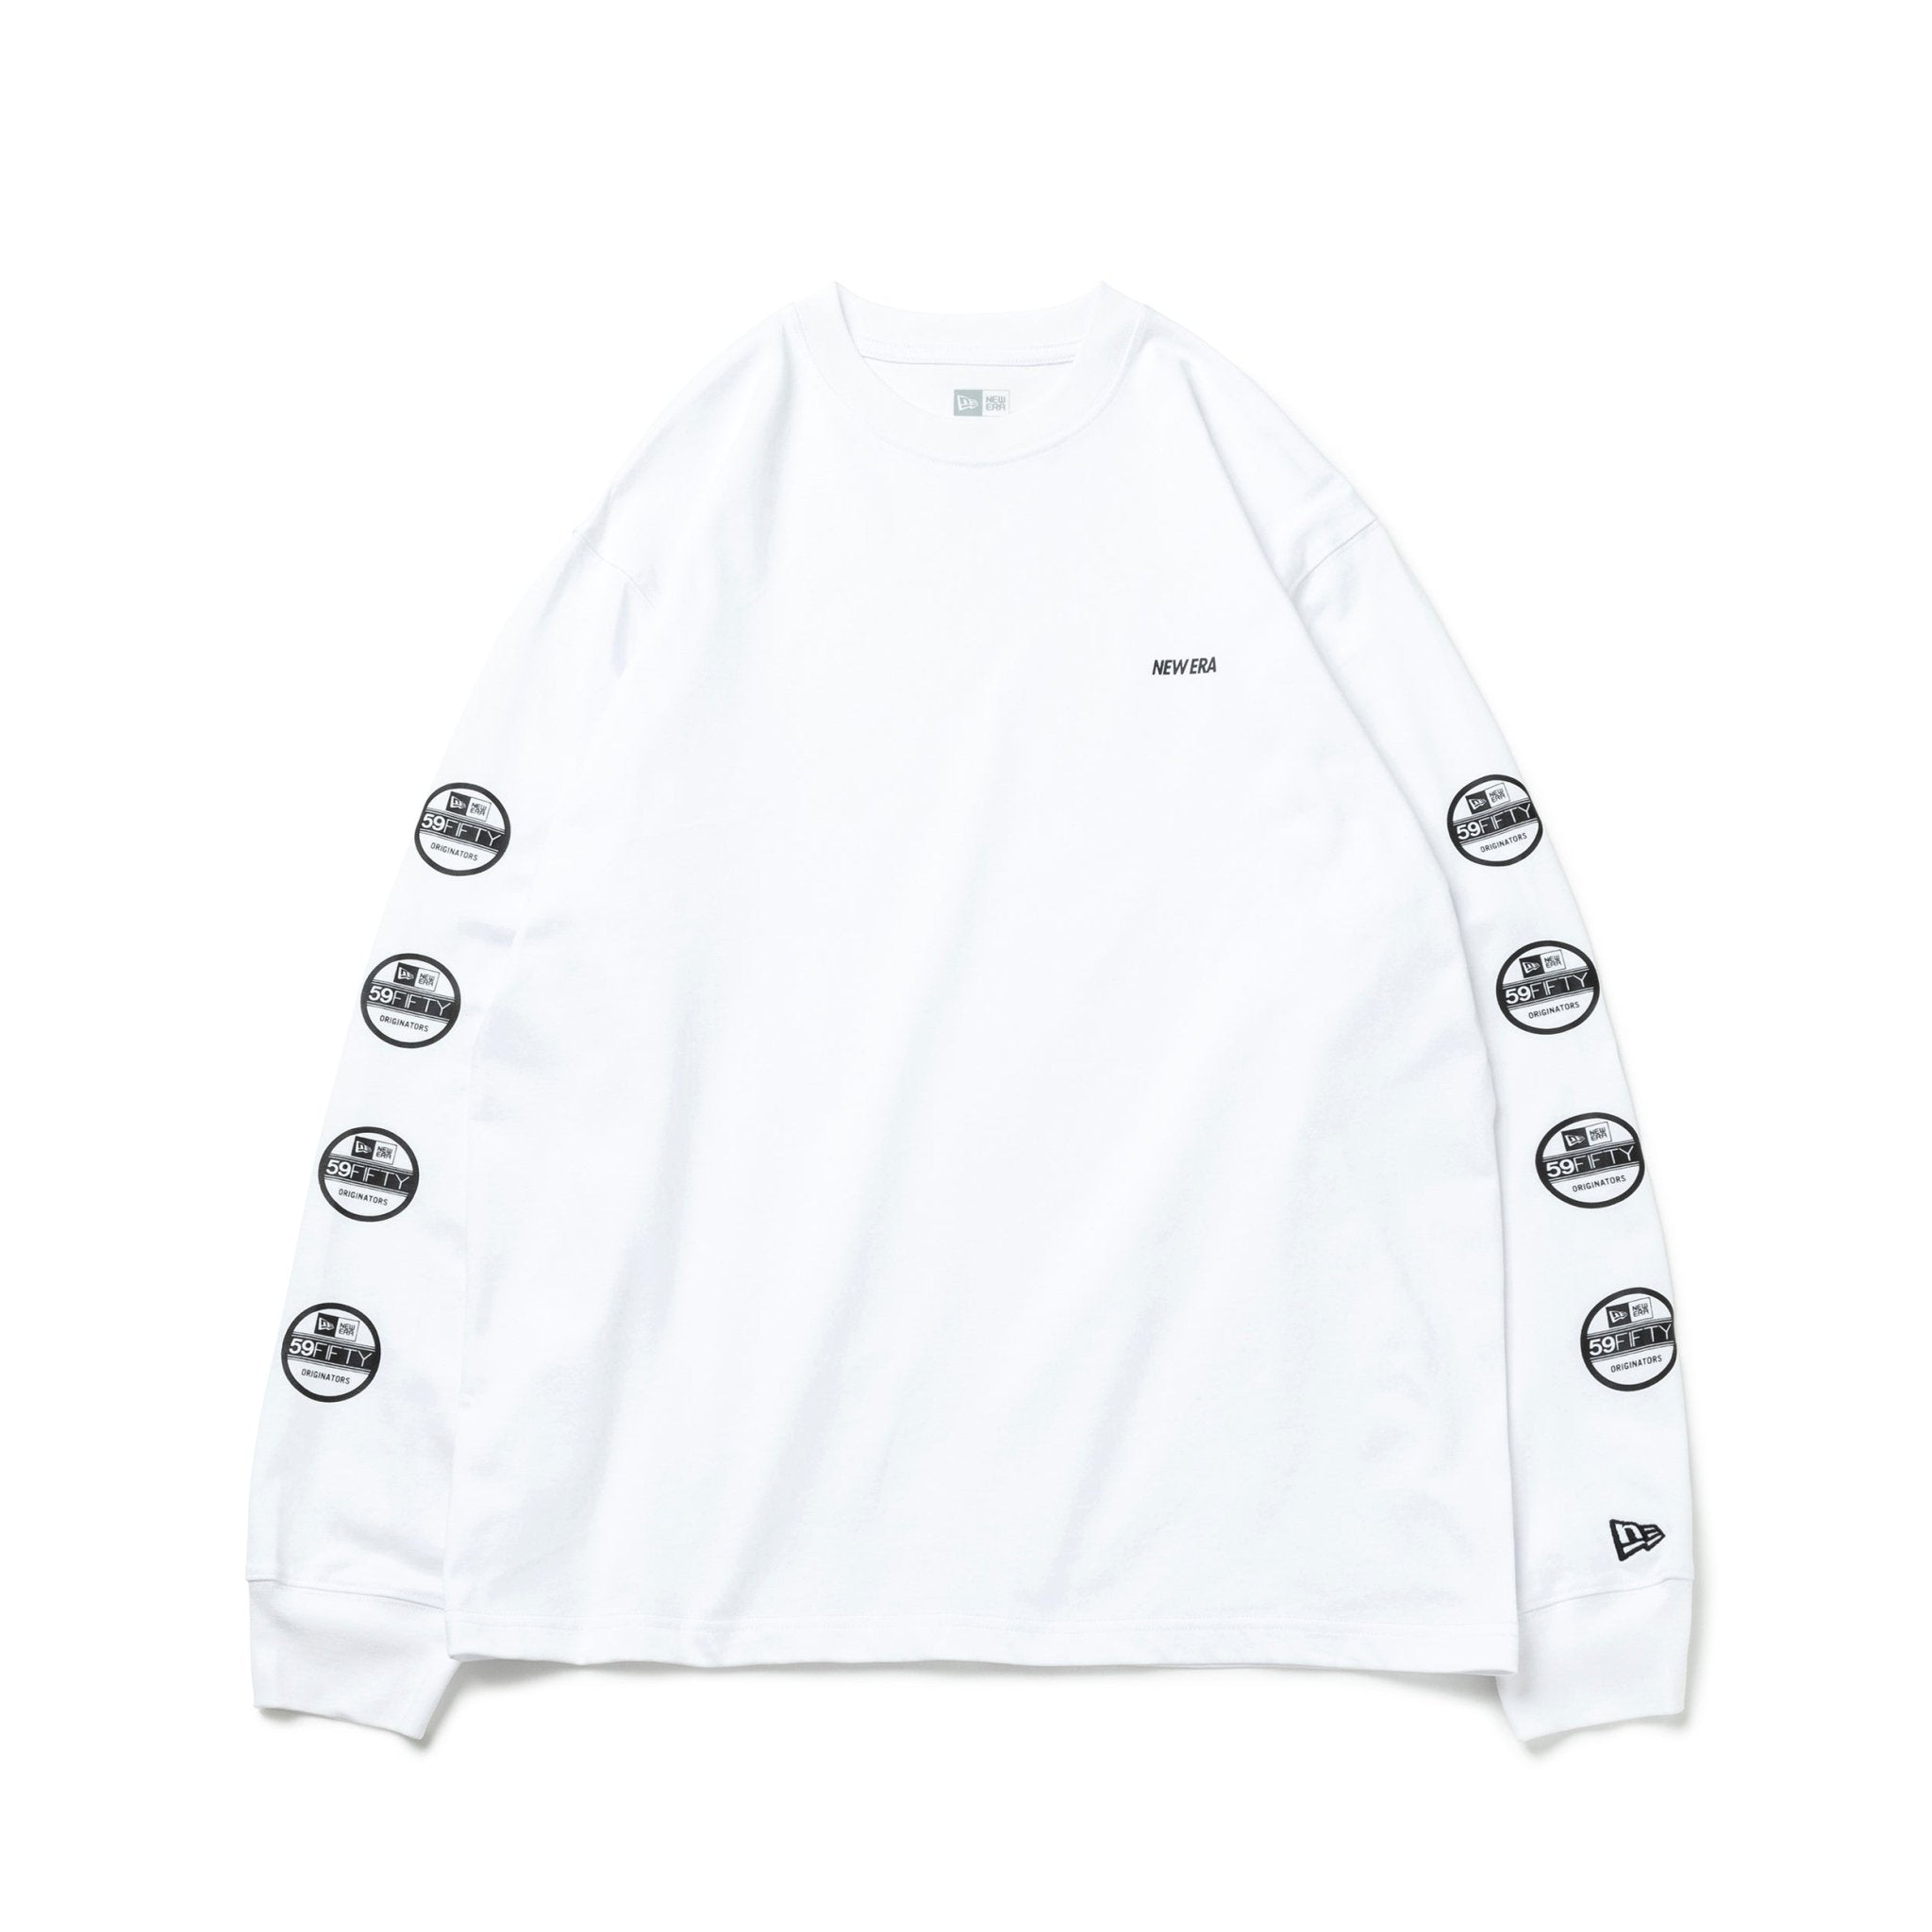 EWC TEAM Tシャツ コットン Lサイズ 900-223-290L JP店